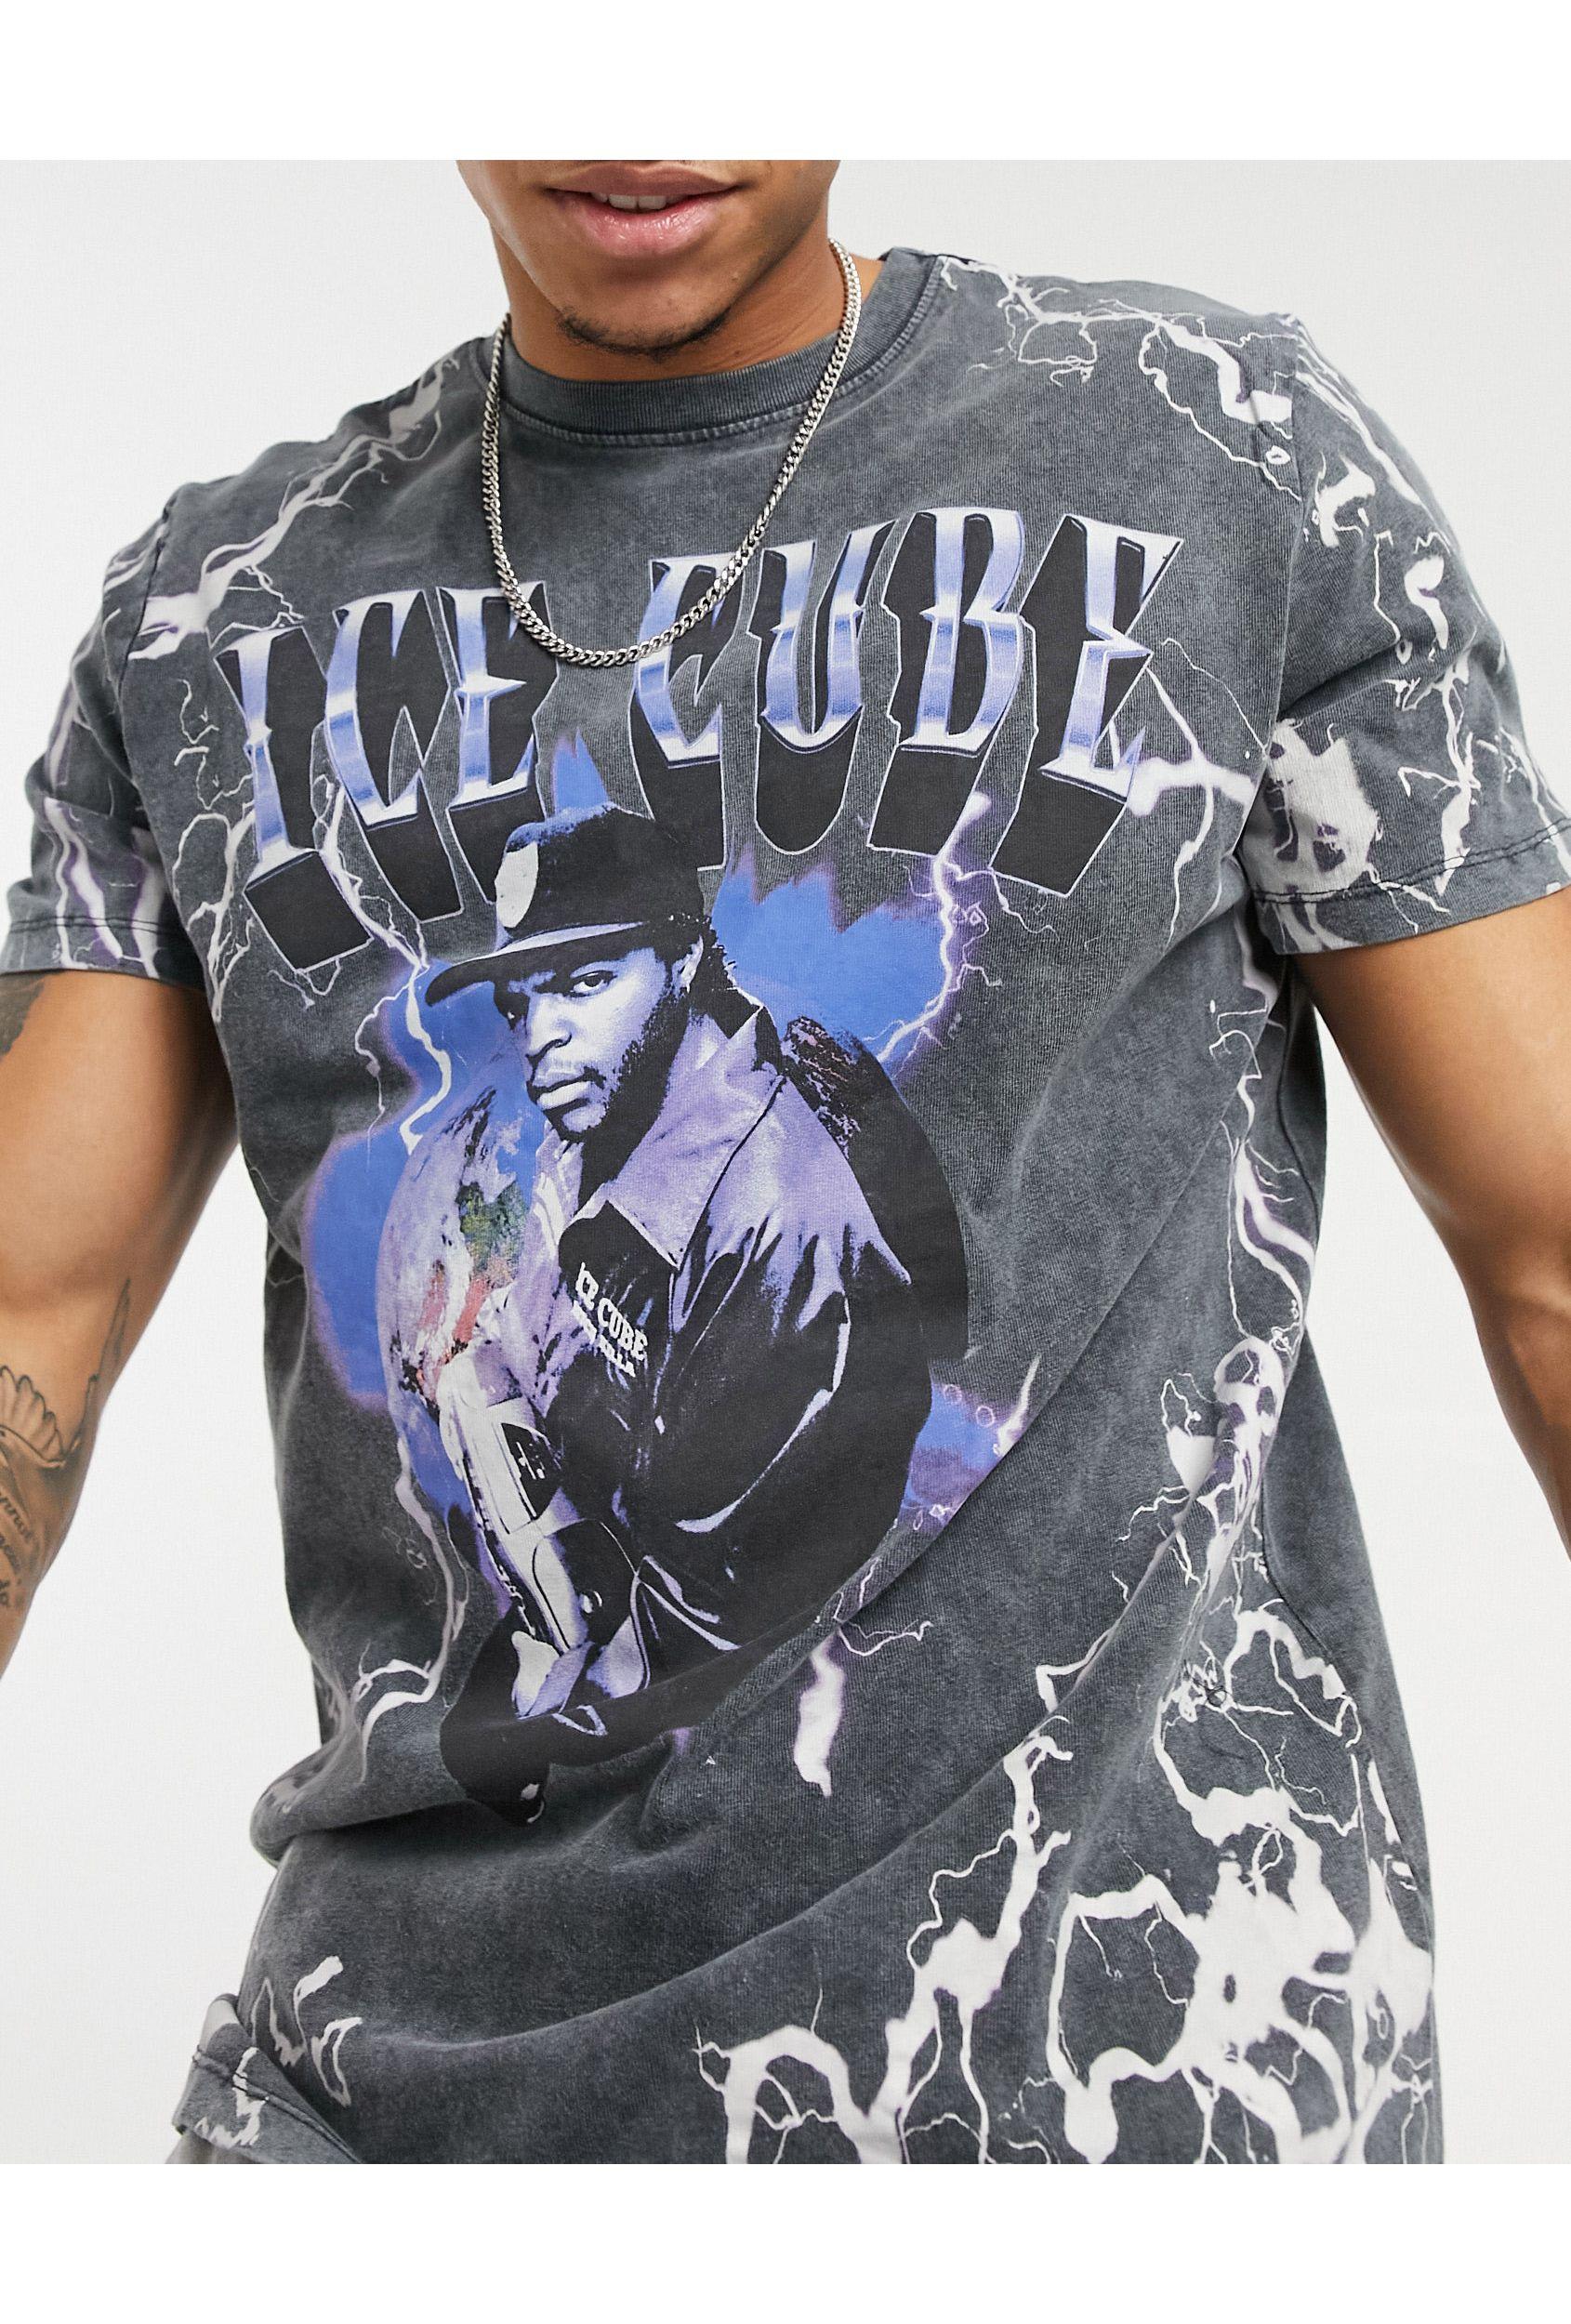 Pull&Bear Ice Cube T-shirt in Black for Men | Lyst